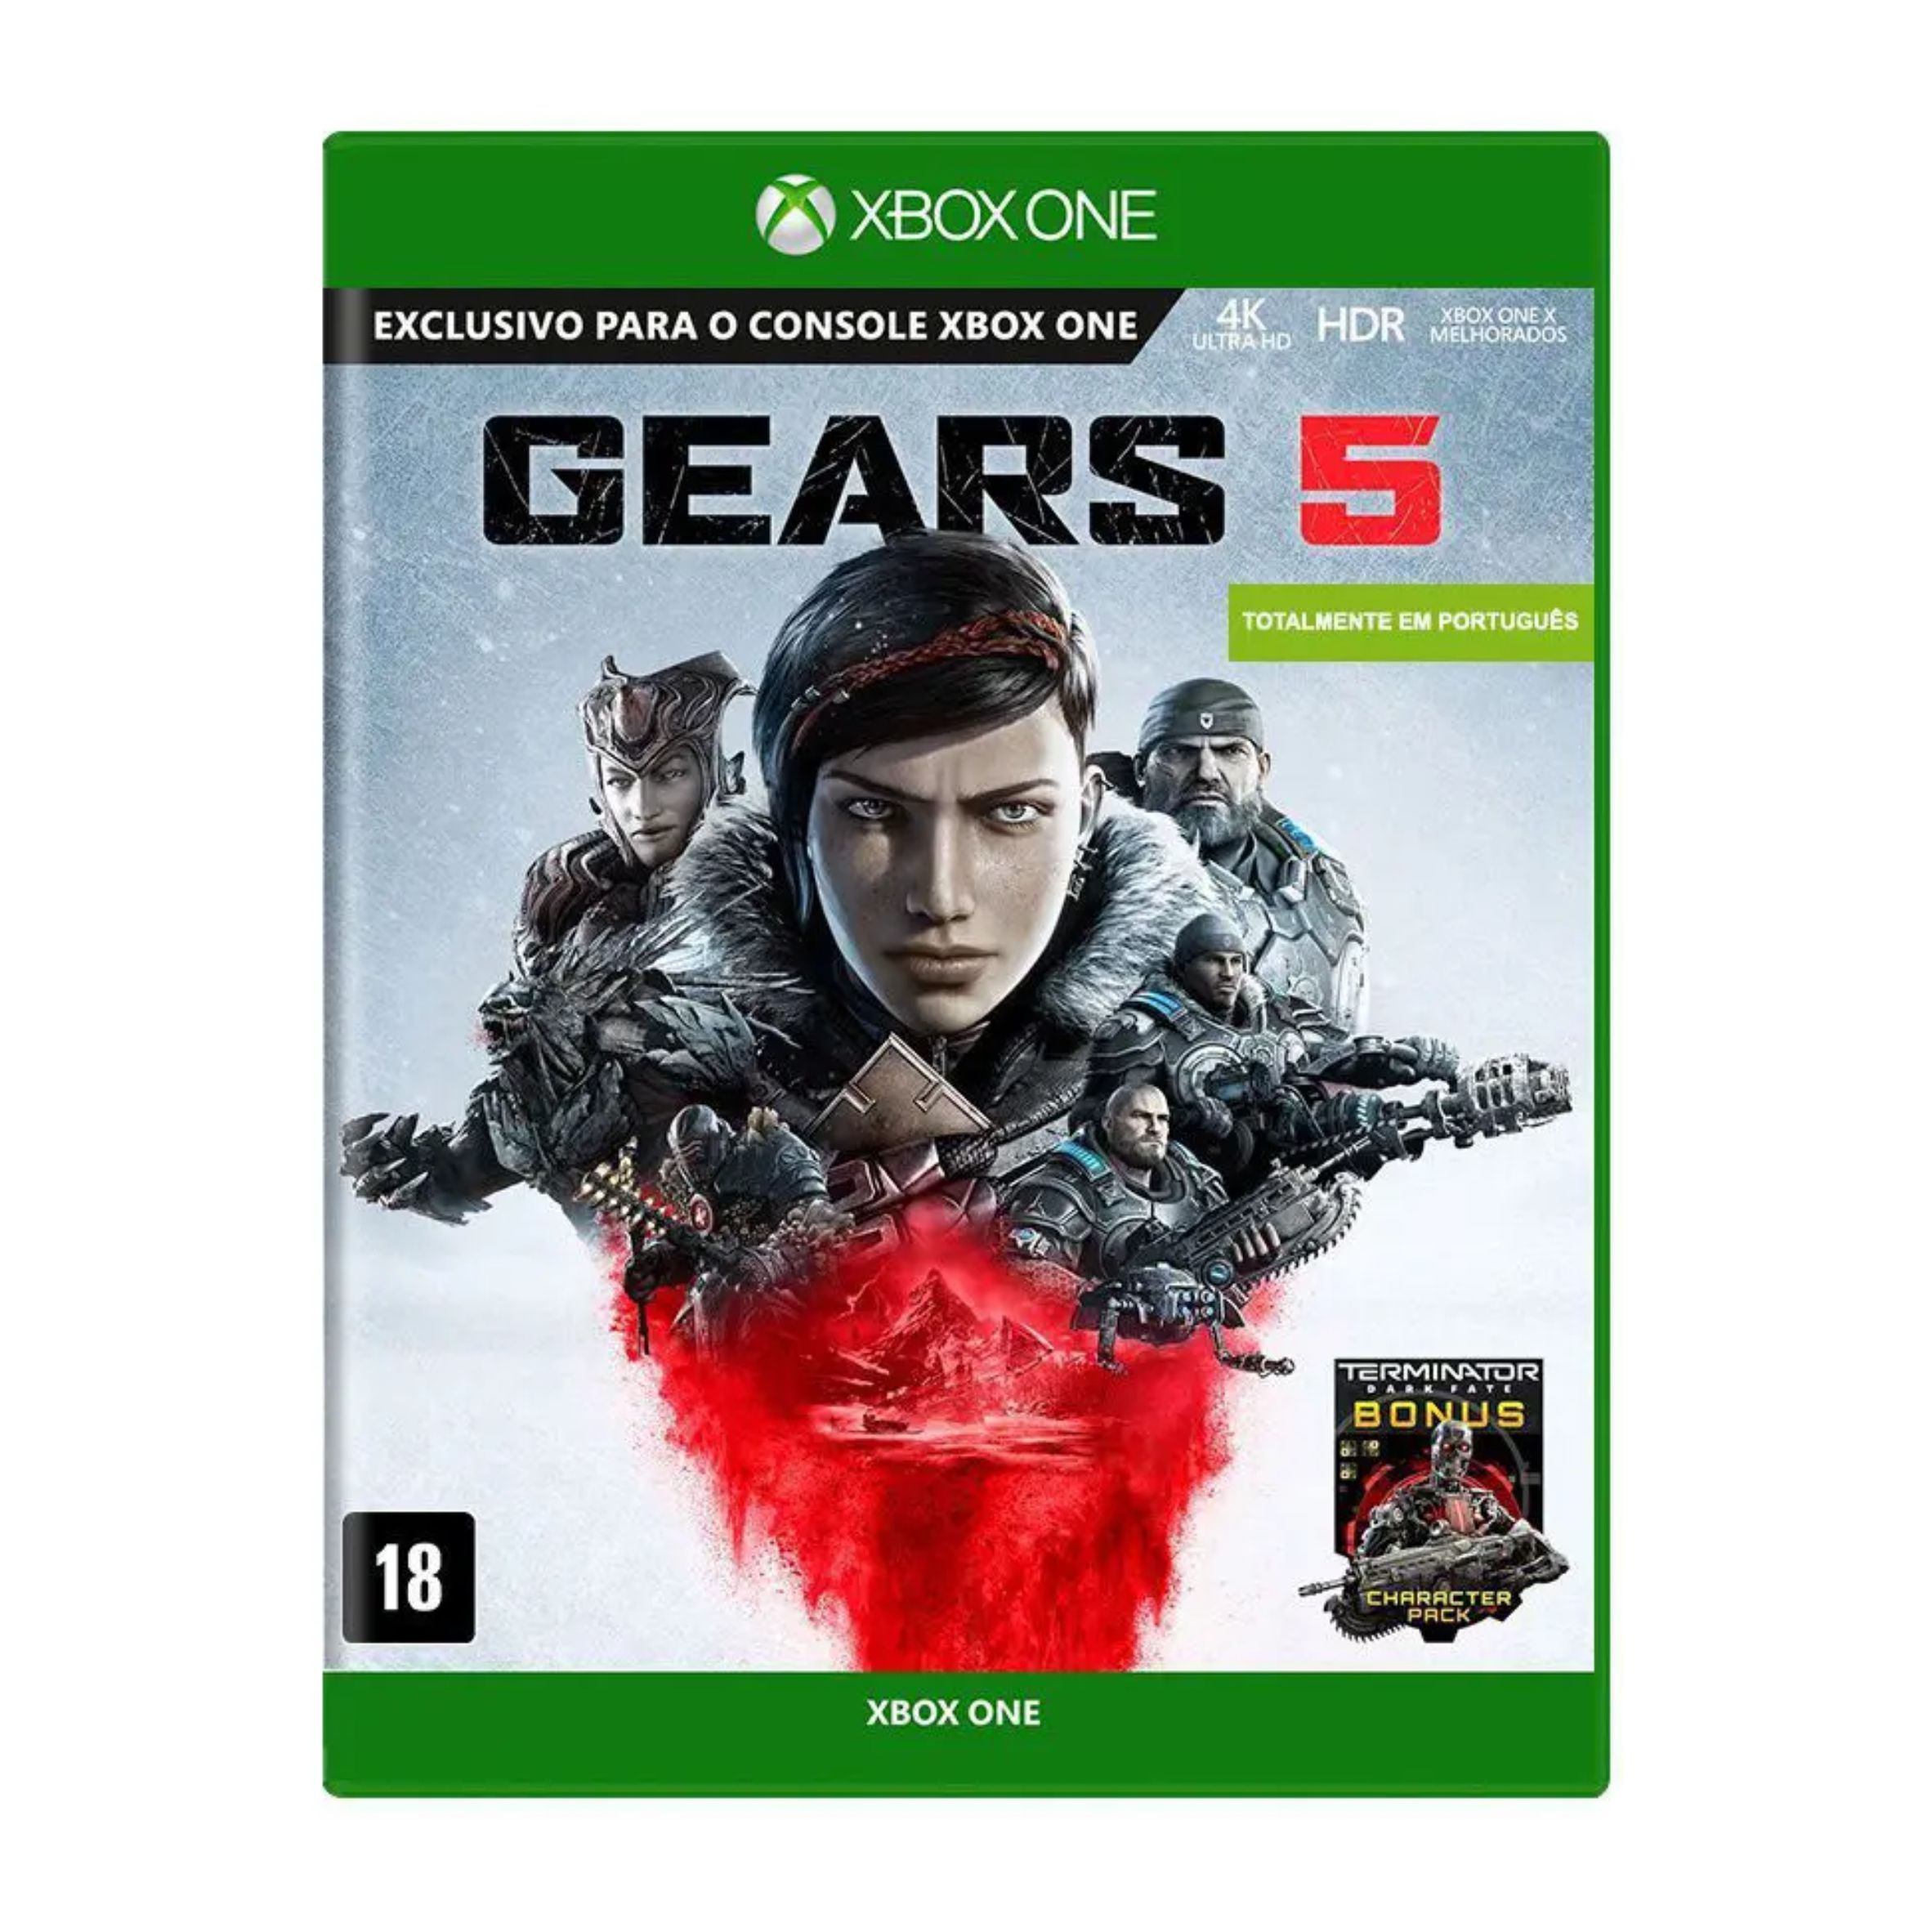 Gears of War 3 - Xbox 360 (SEMI-NOVO)